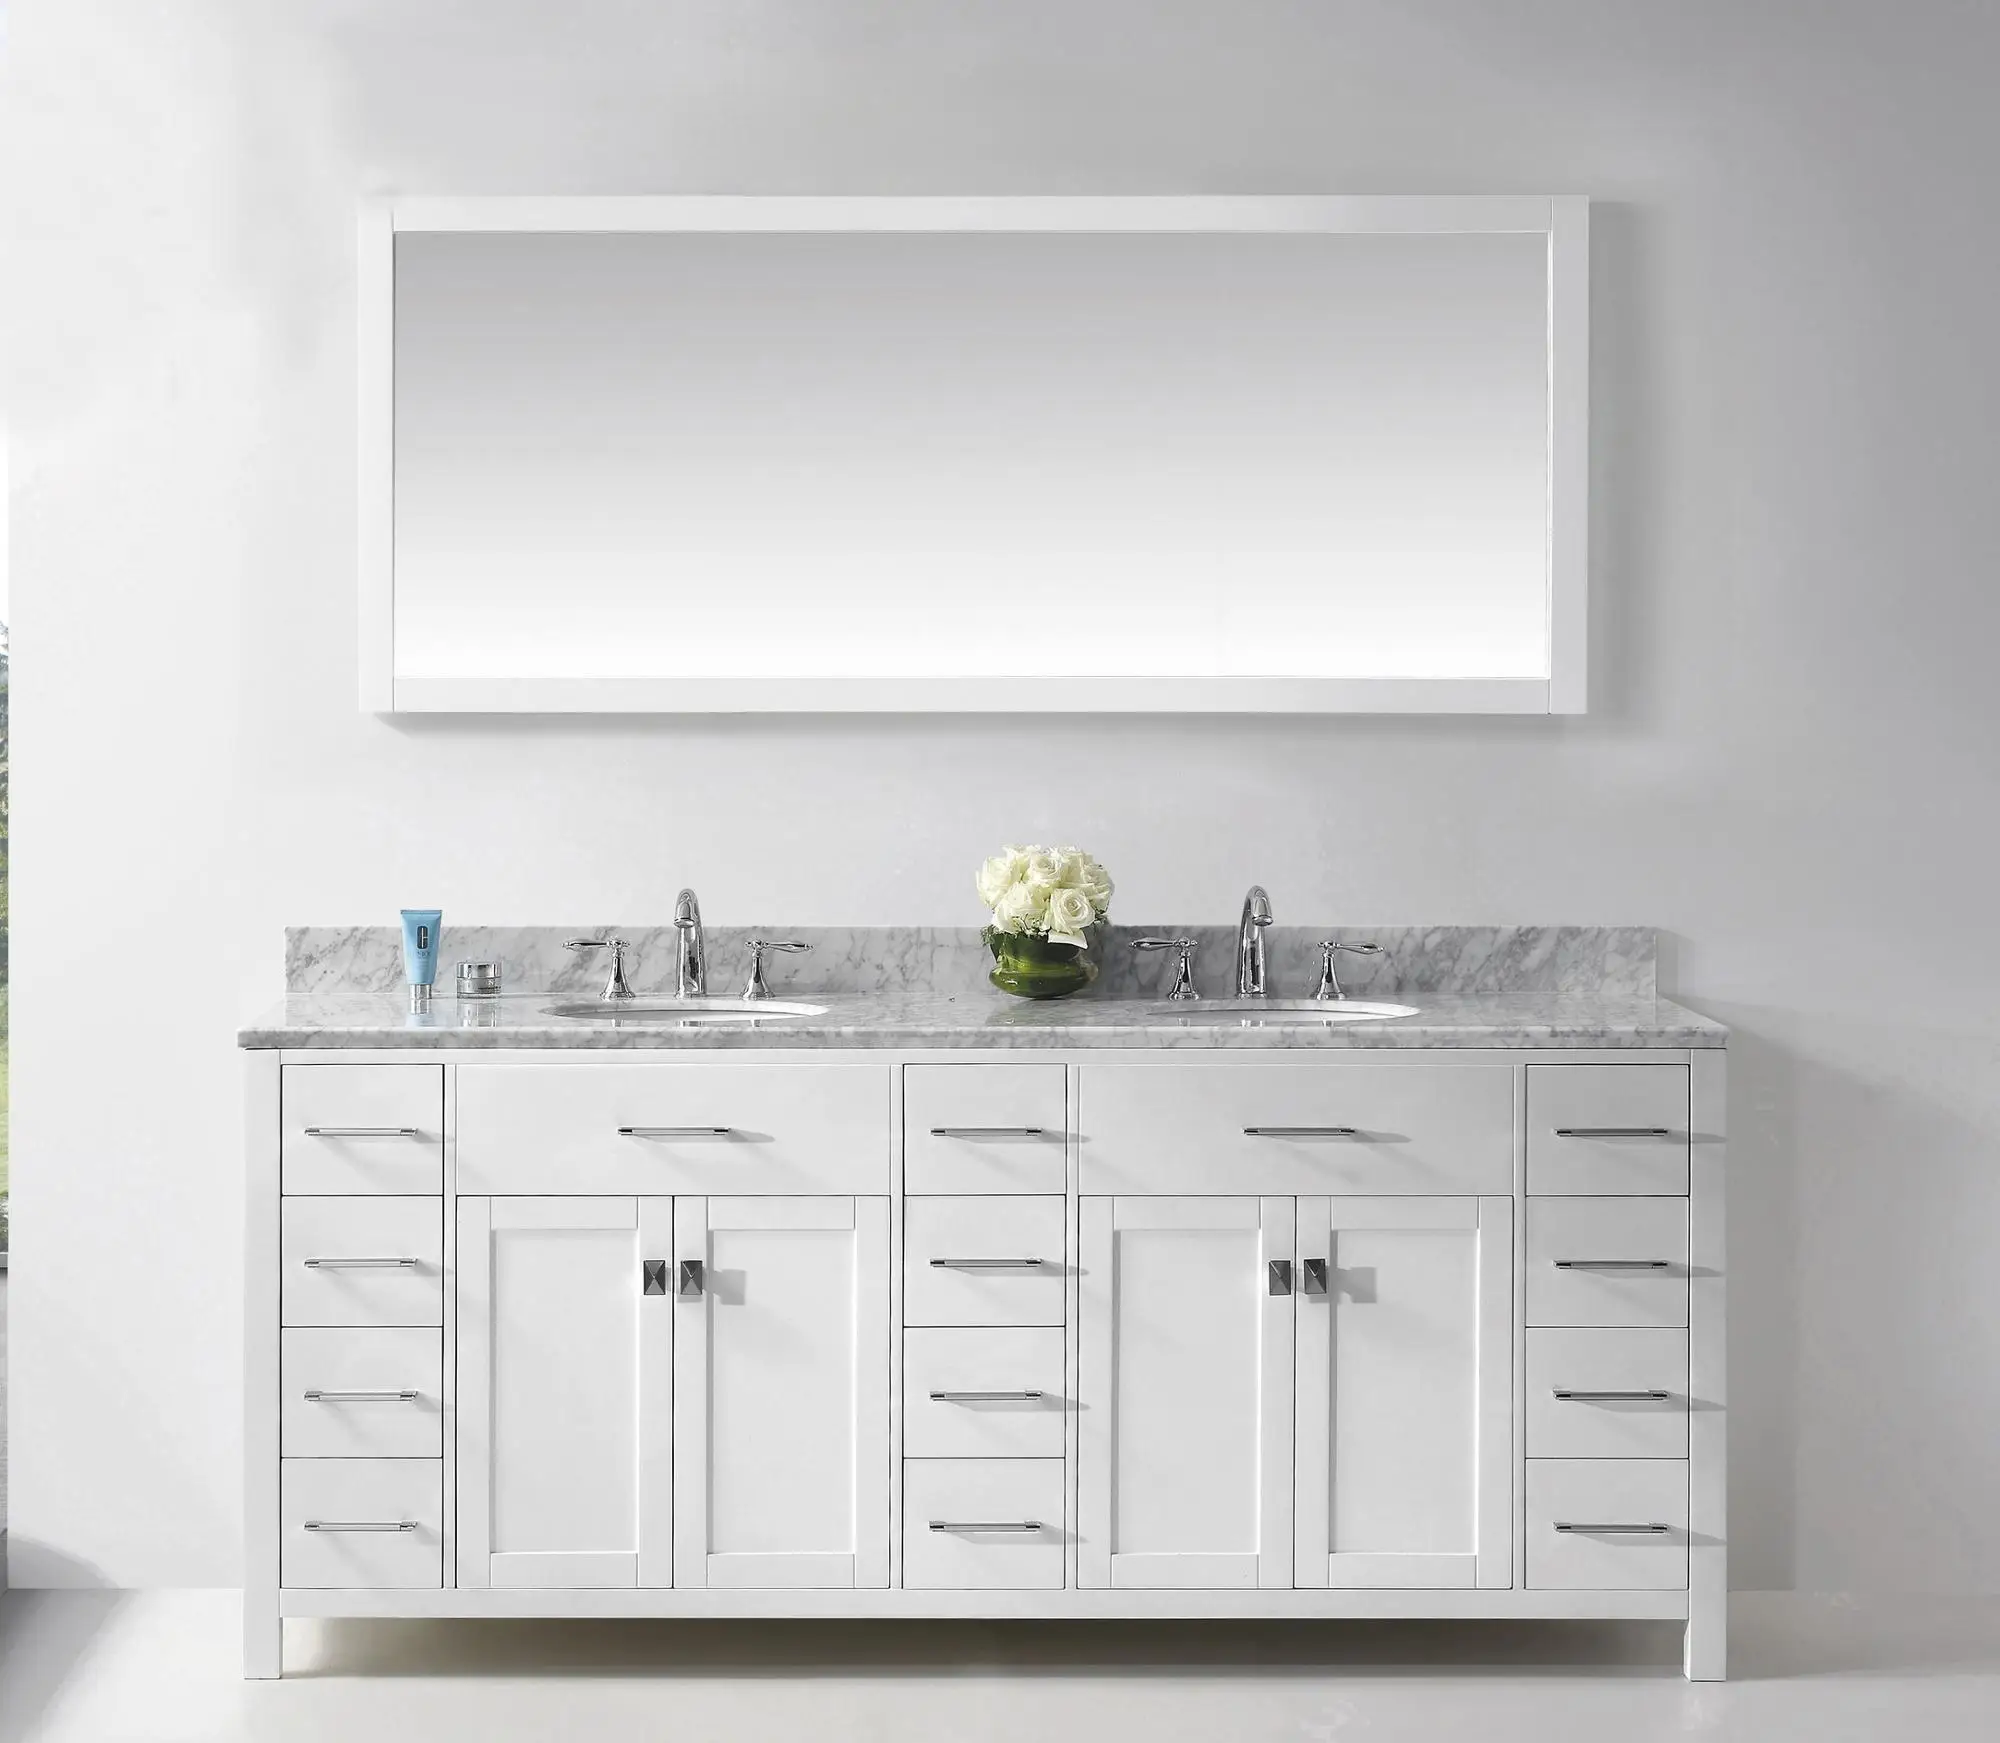 2021 Hangzhou Vermont Factory Ghana Bathroom Vanity Mirror Hinges Bathroom Cabinets Buy Bathroom Cabinet